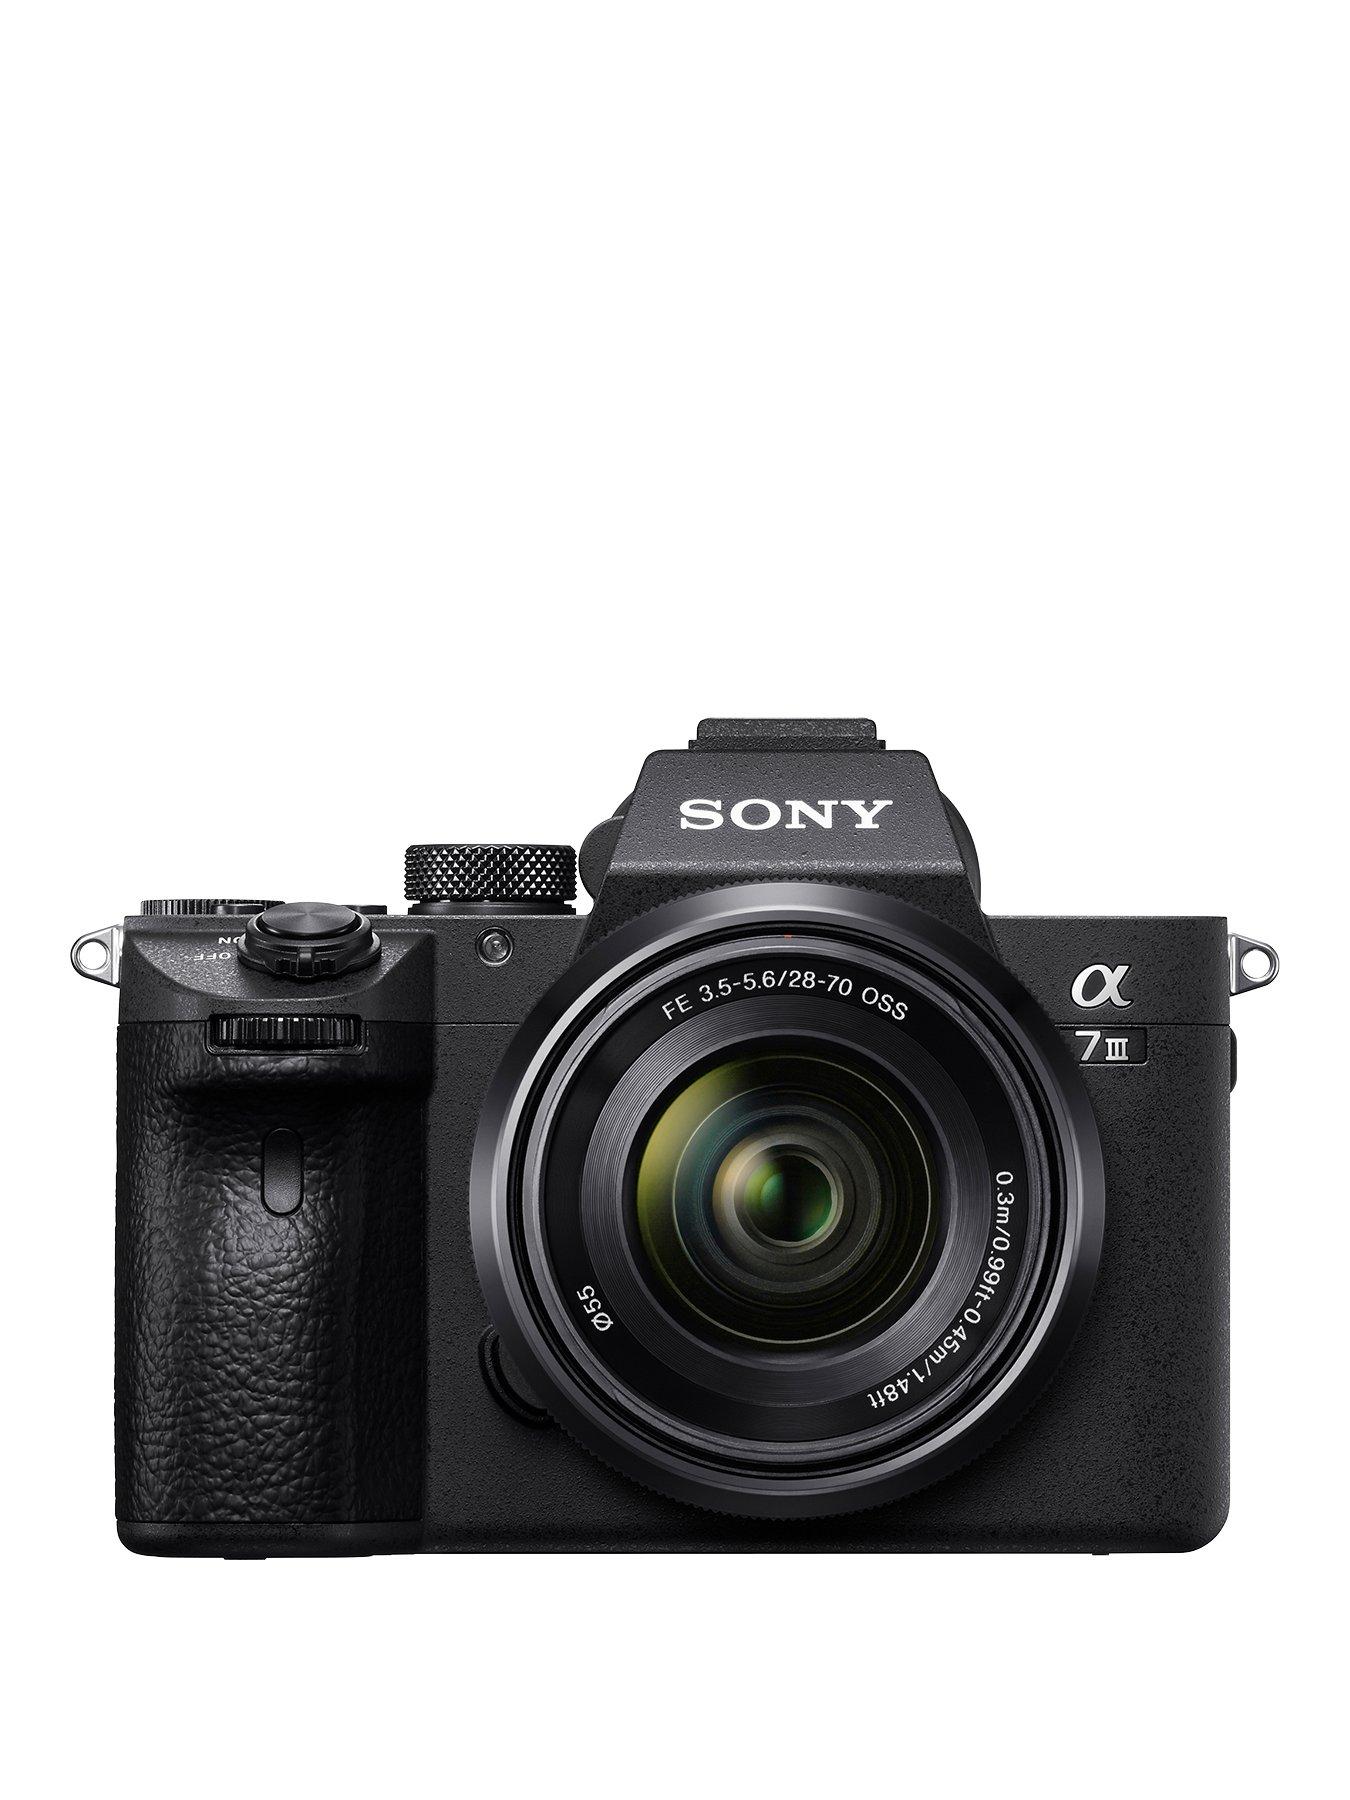 Sony A7II Digital SLR Cameras for Sale, Shop New & Used Digital Cameras